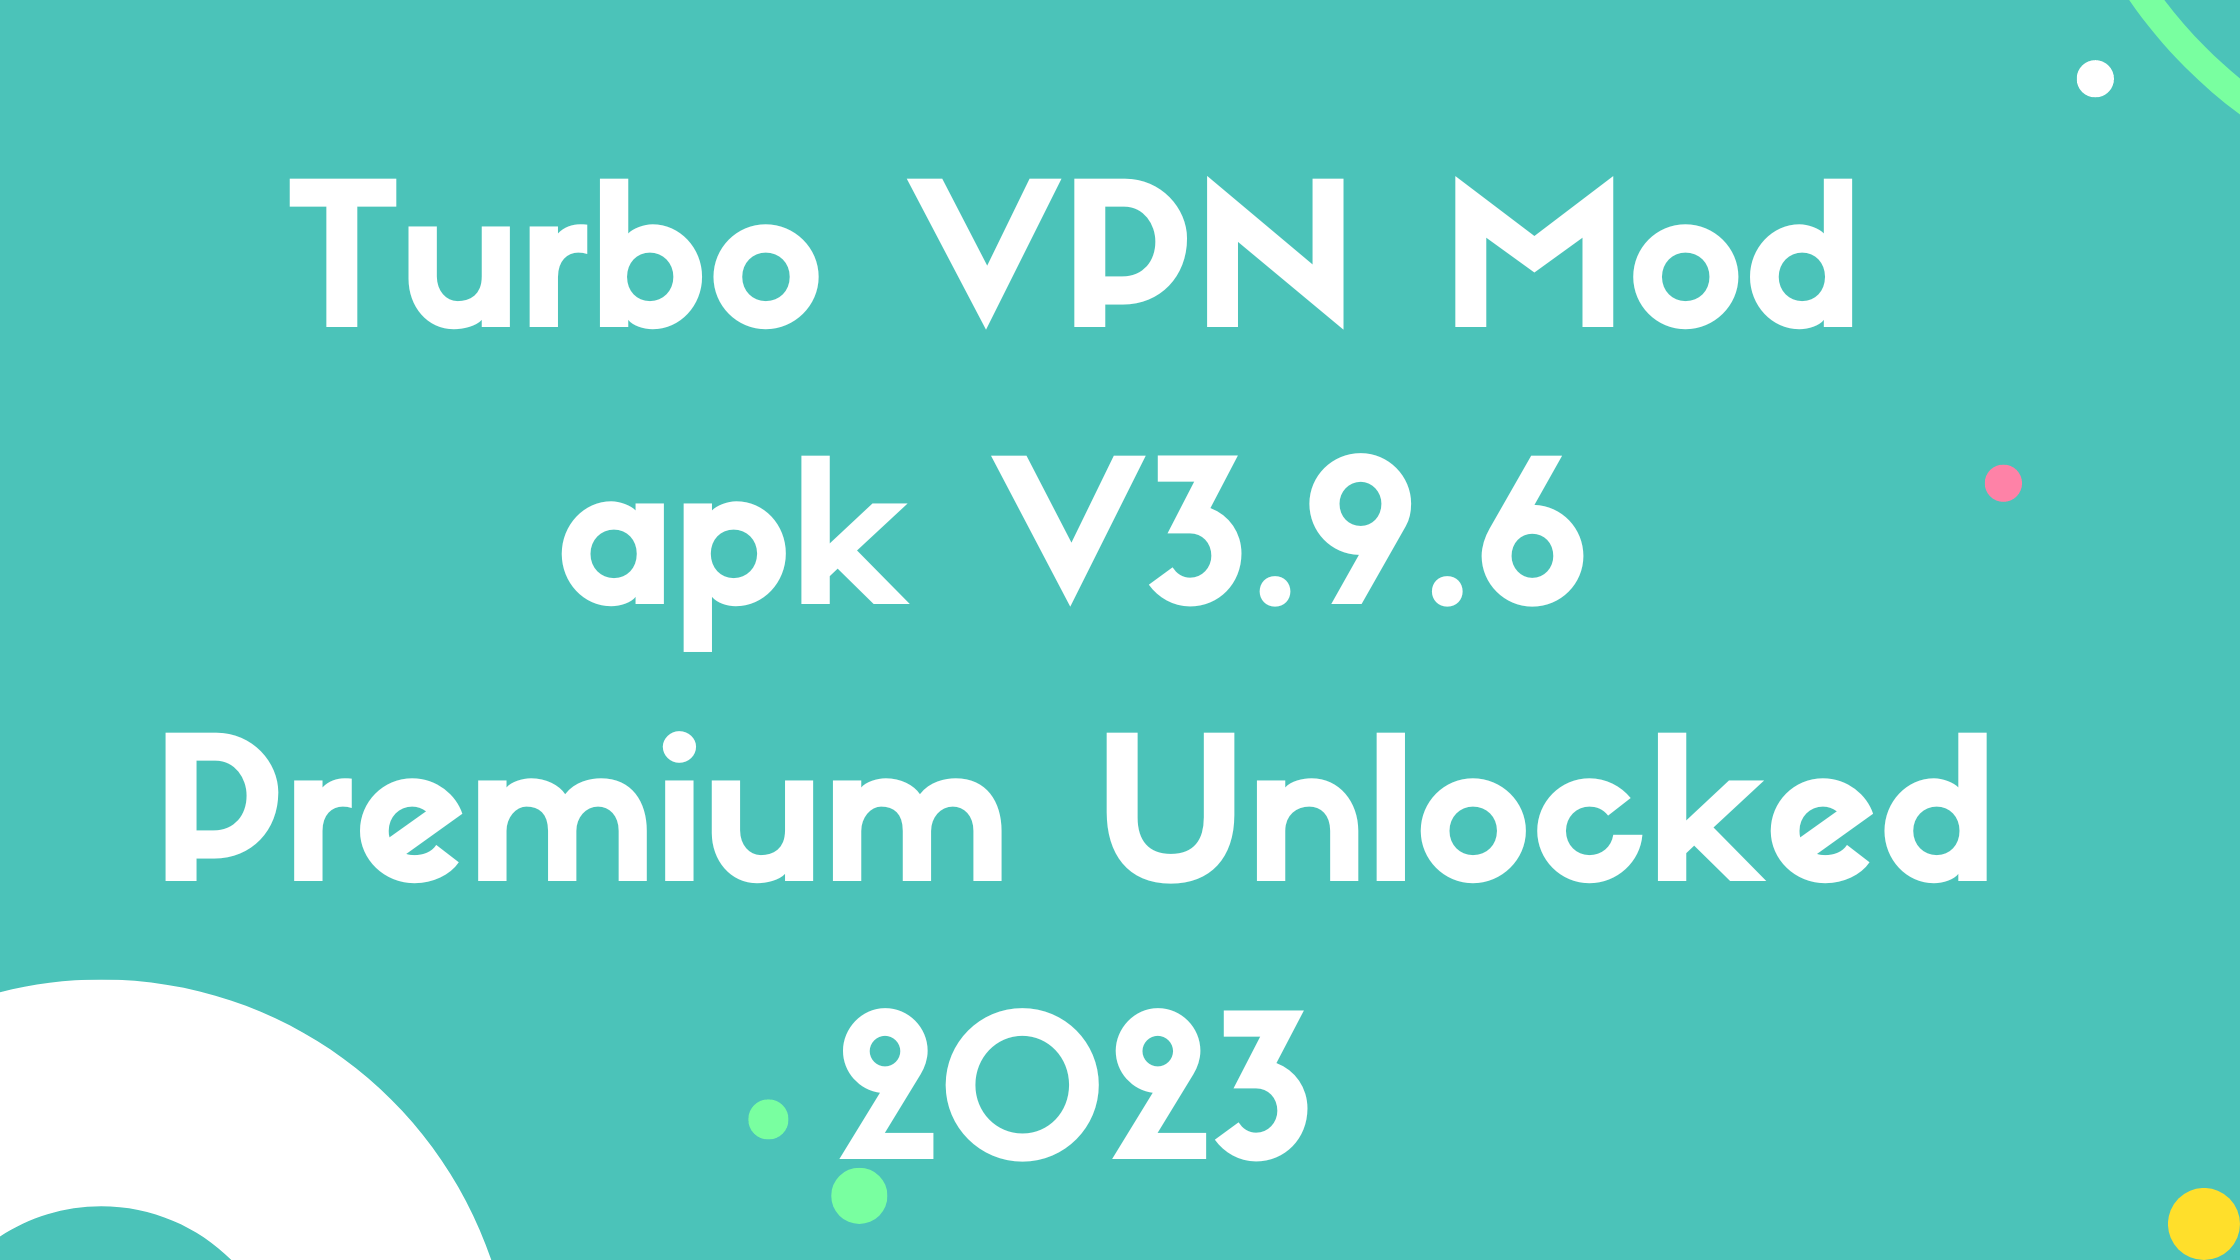 Turbo VPN Mod apk V3.9.6 Premium Unlocked 2023